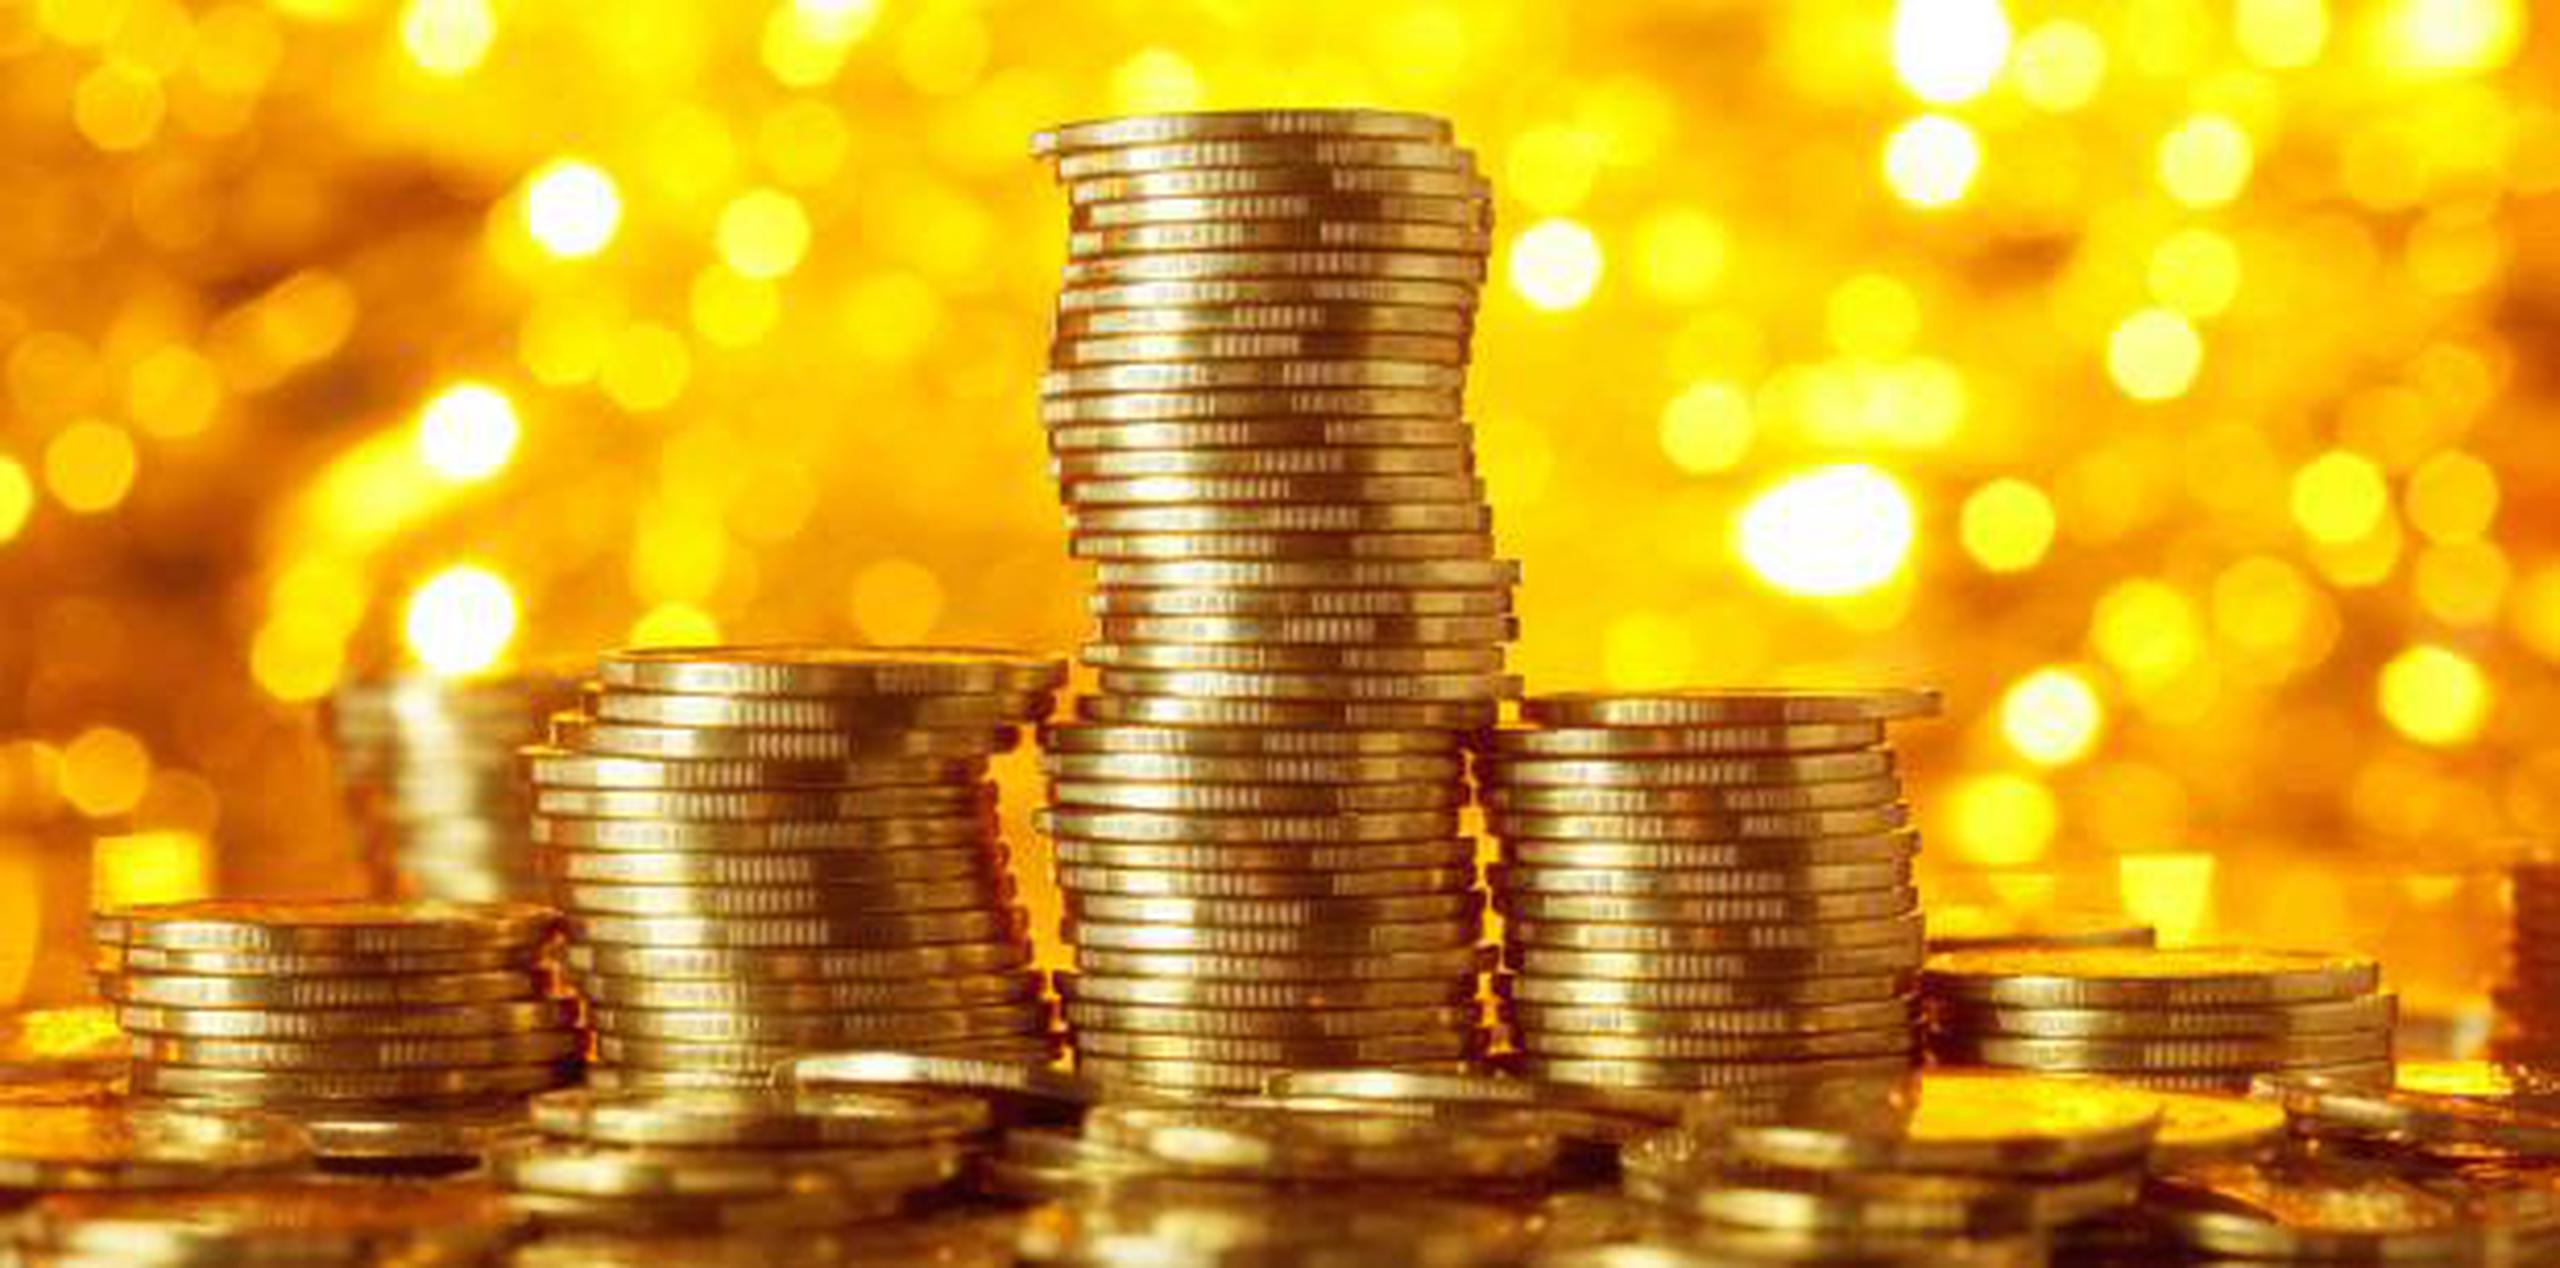 Dos toneladas equivalen a alrededor de 250,000 monedas de oro. (Shutterstock)